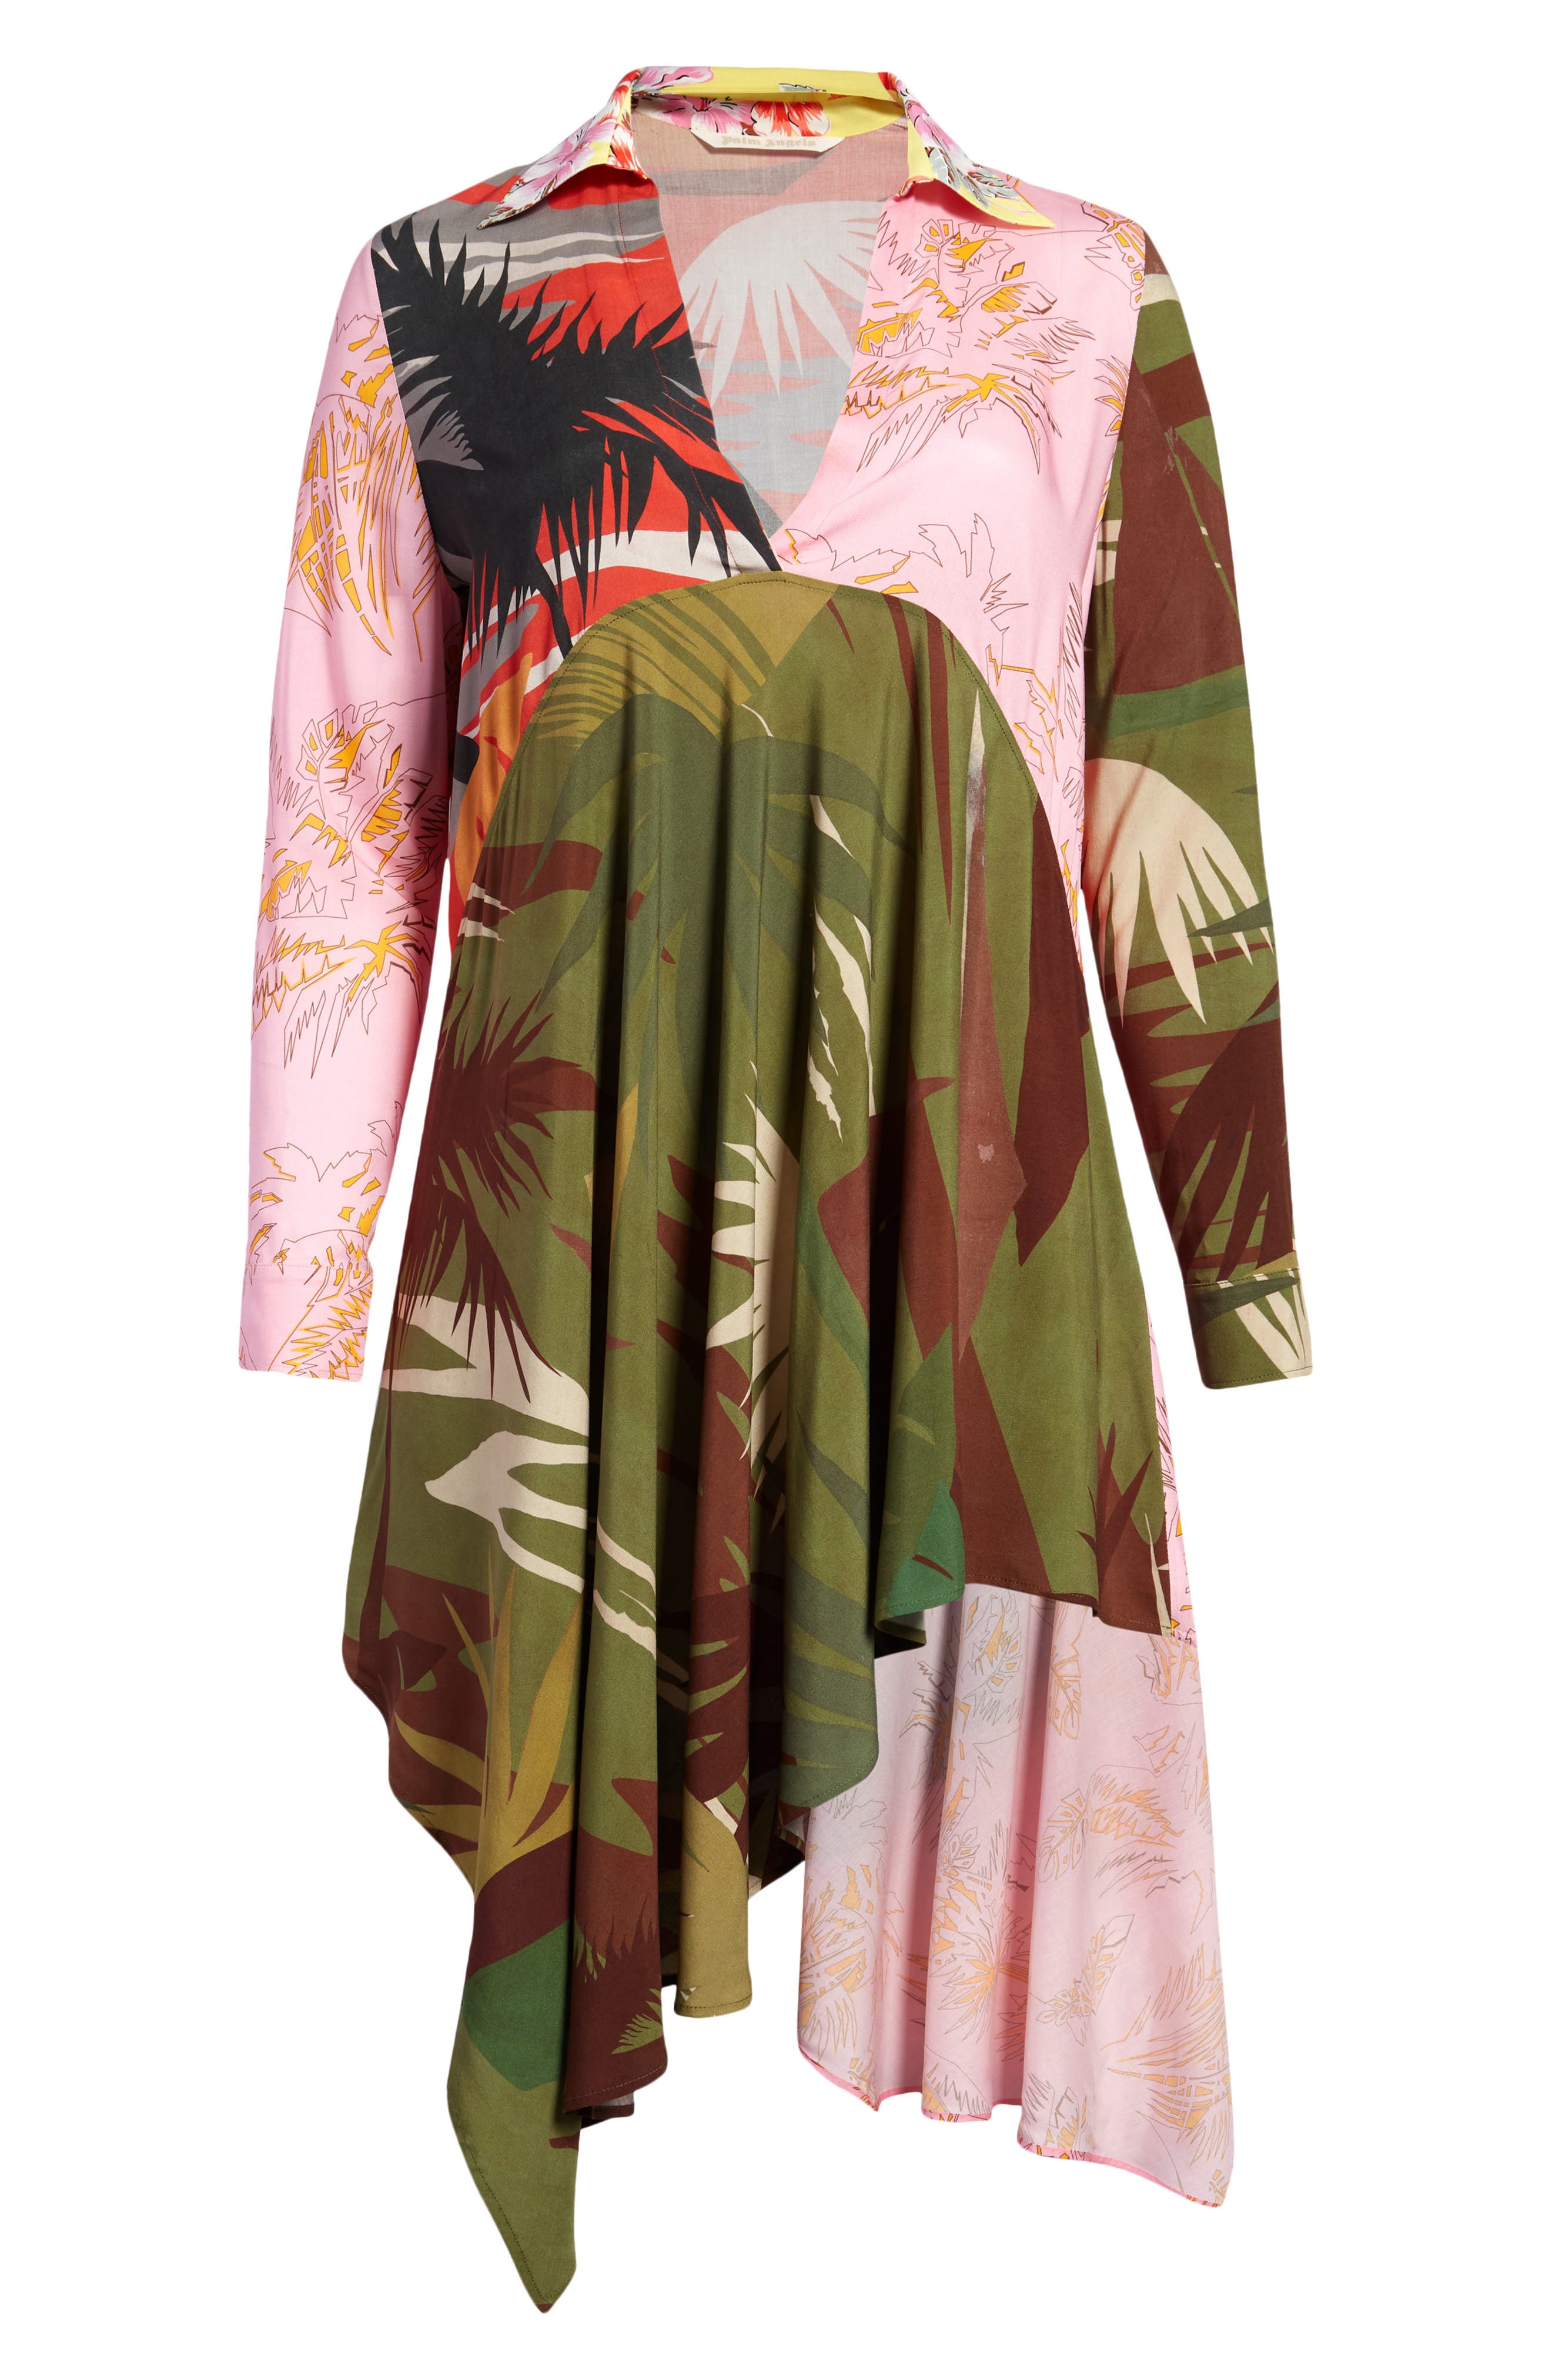 Palm Angels Mixed Print Long Sleeve Asymmetric Hem Dress in Military Pink